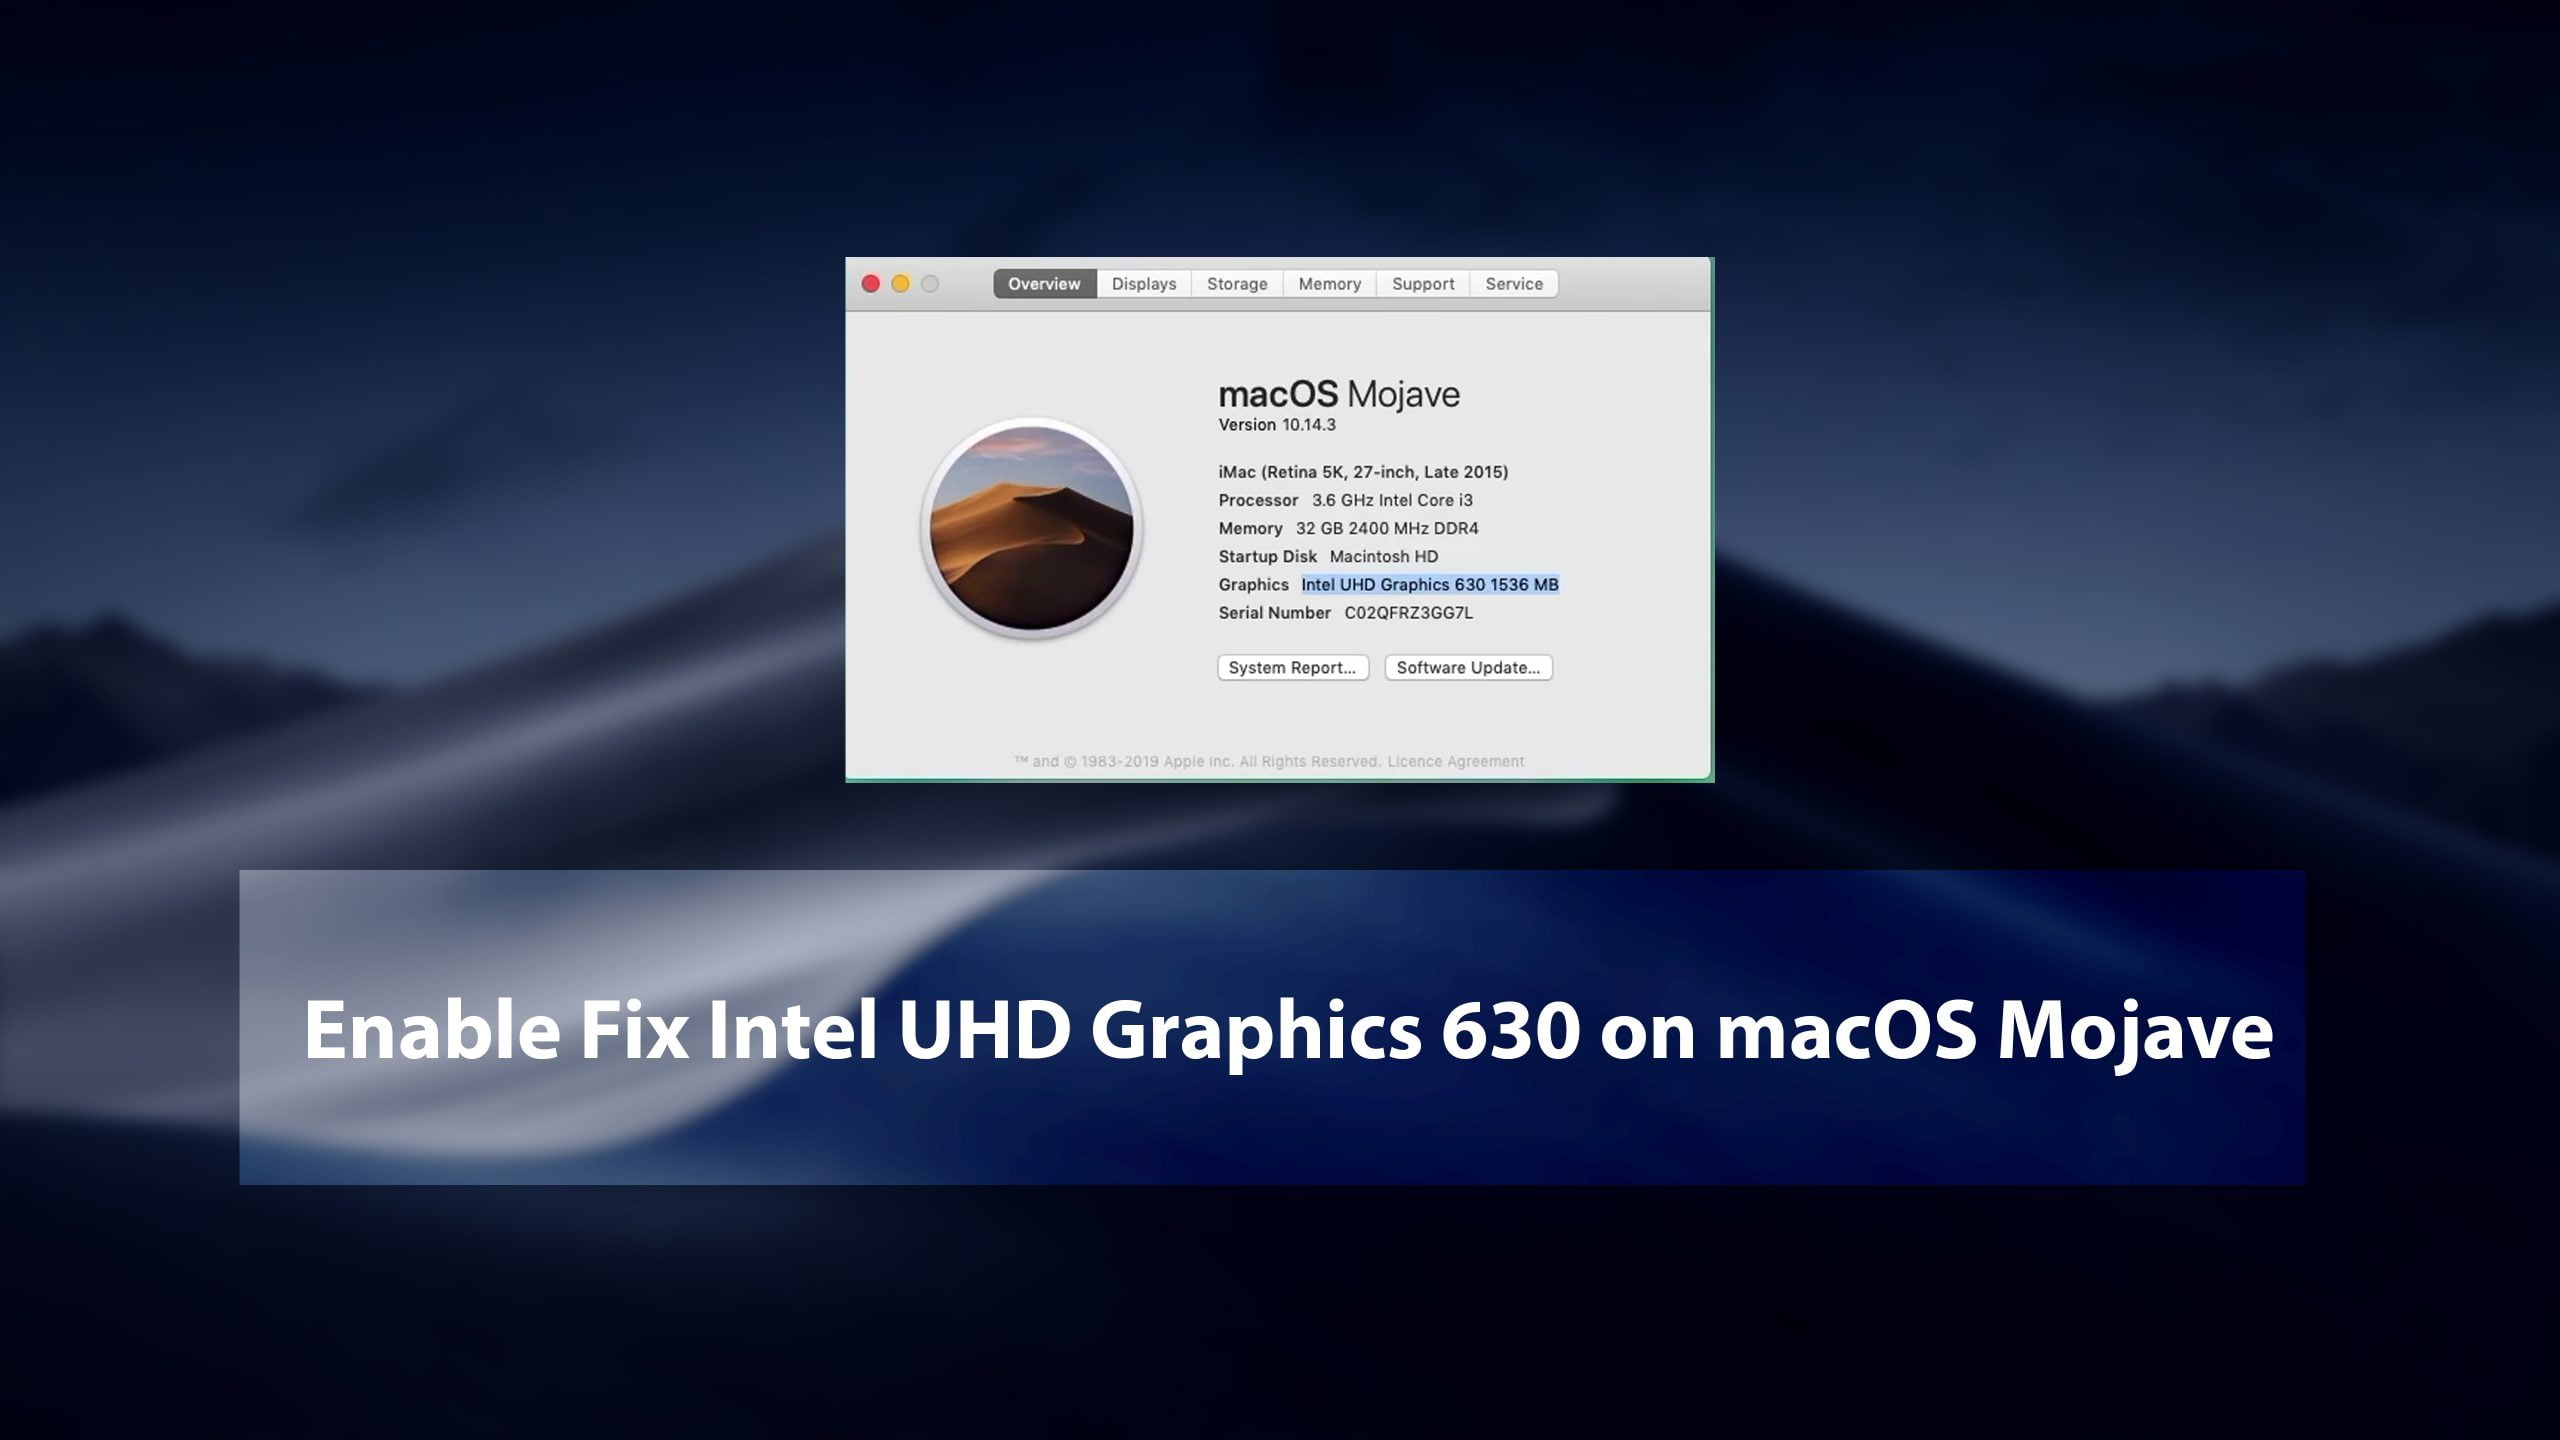 How to Enable Fix Intel UHD Graphics 630 on macOS Mojave